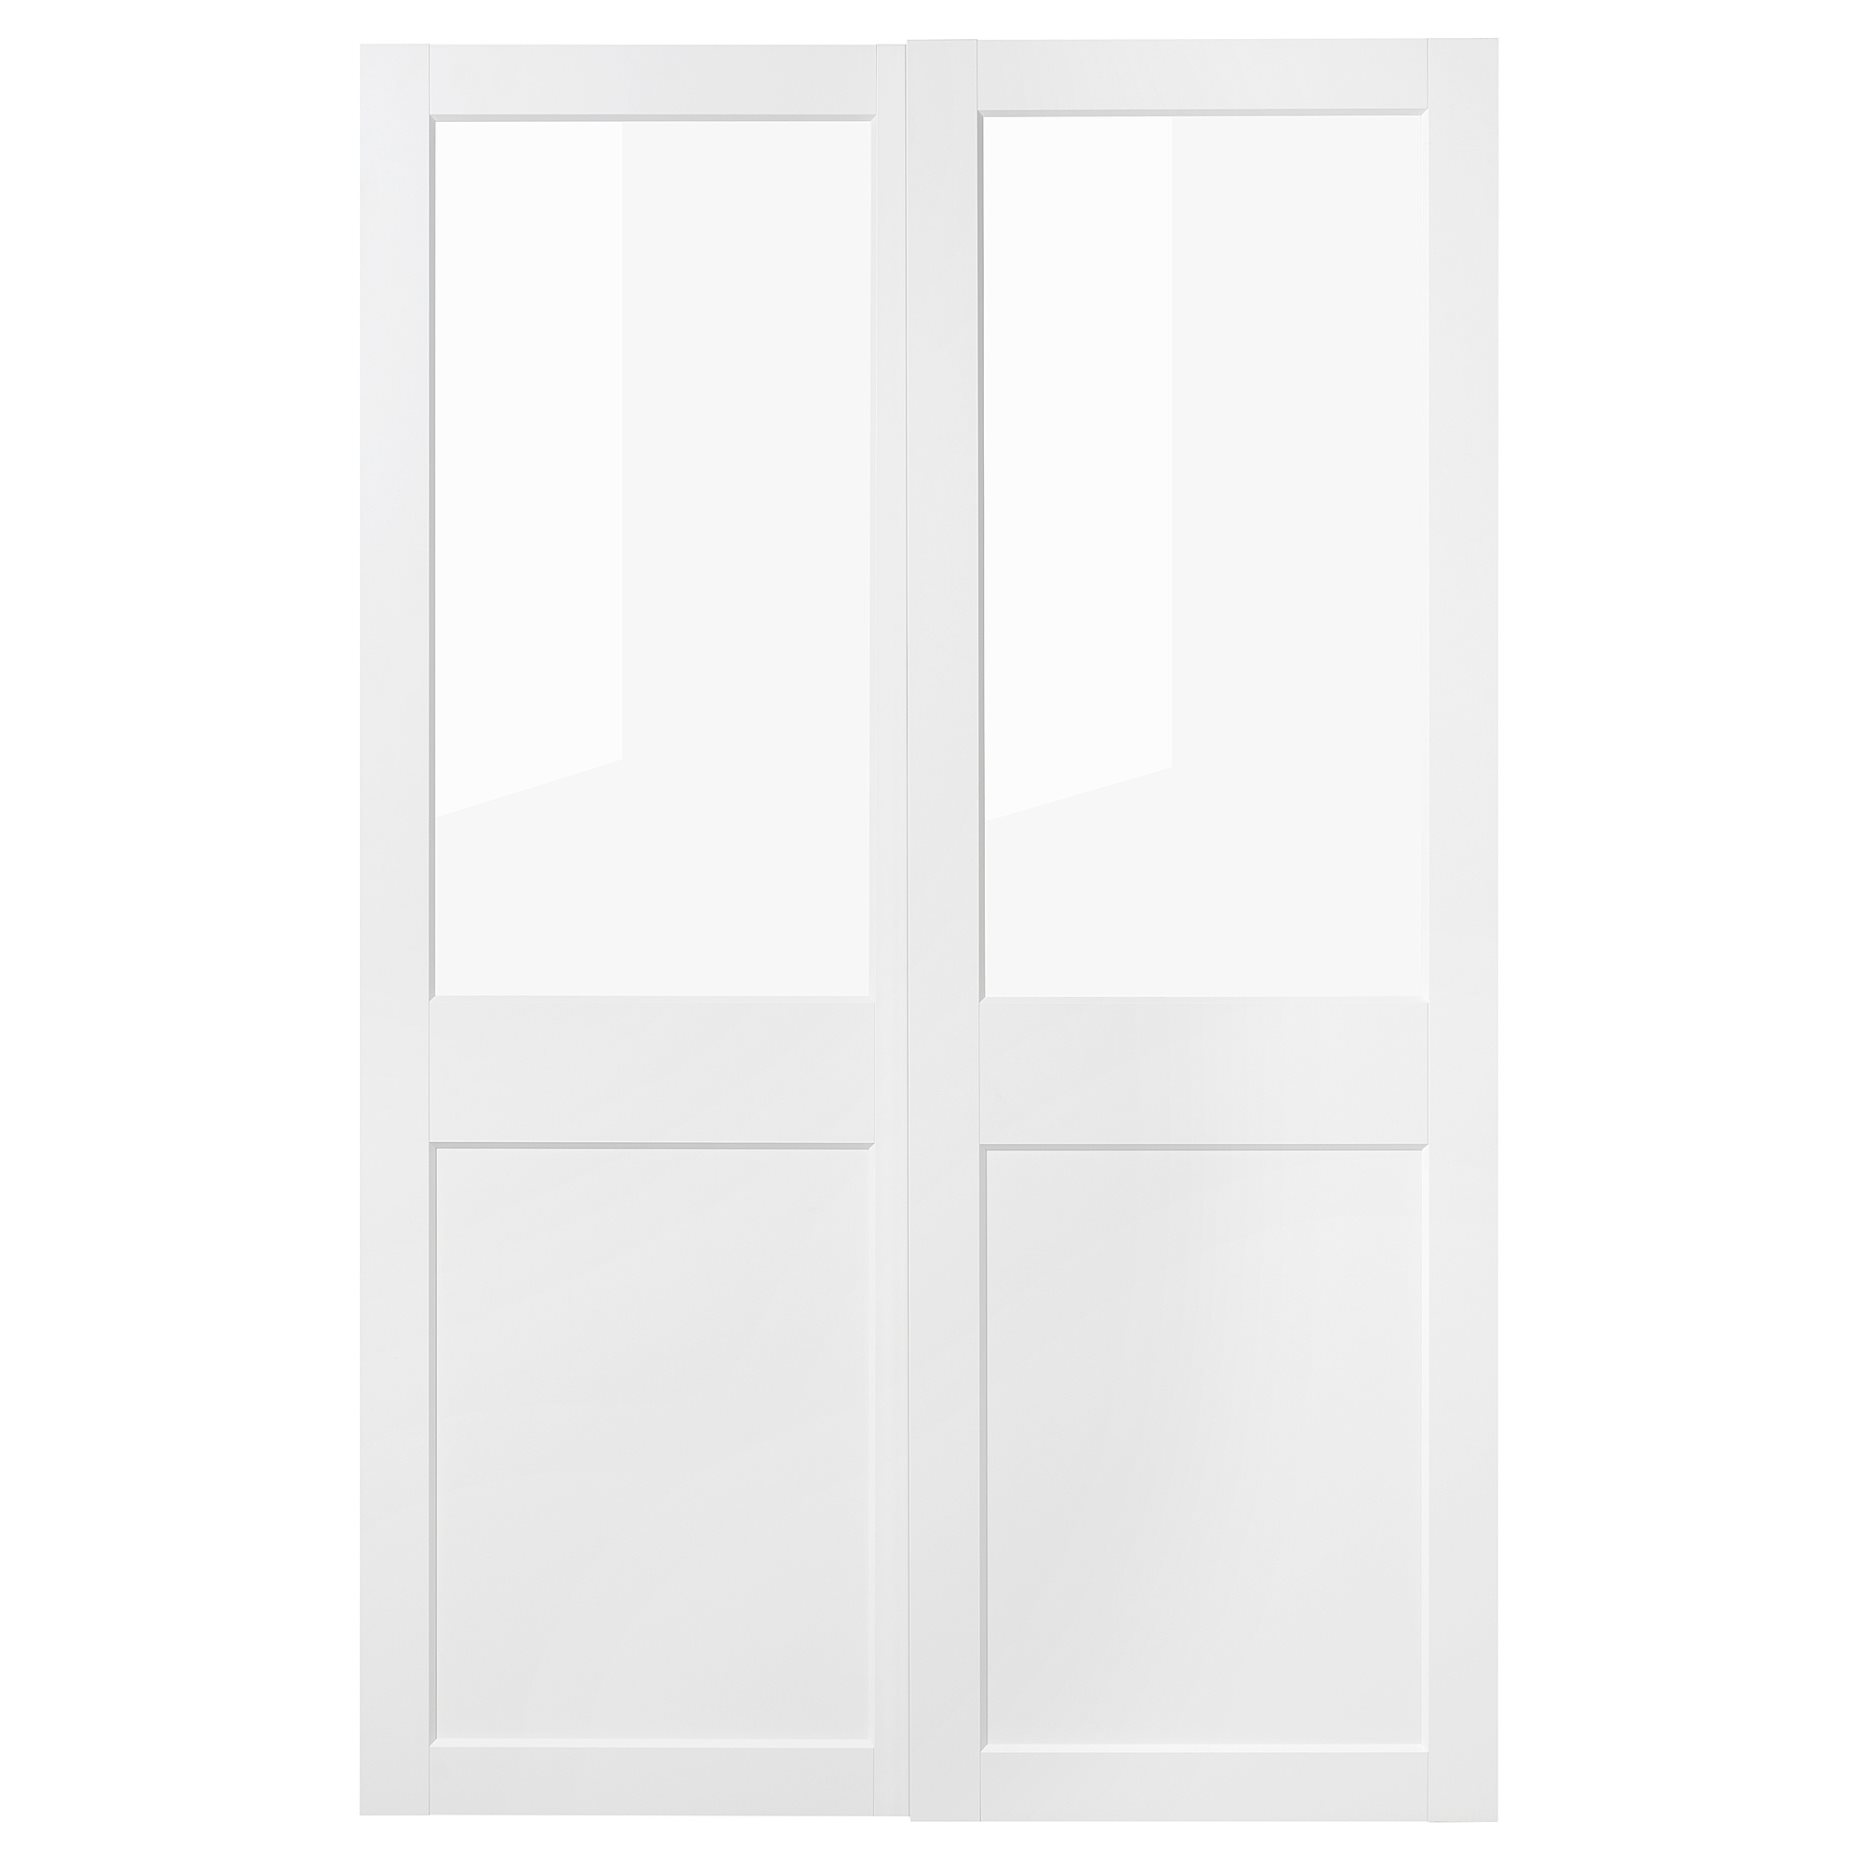 GRIMO, συρόμενη πόρτα, 2 τεμ. 150x236 cm, 405.452.97